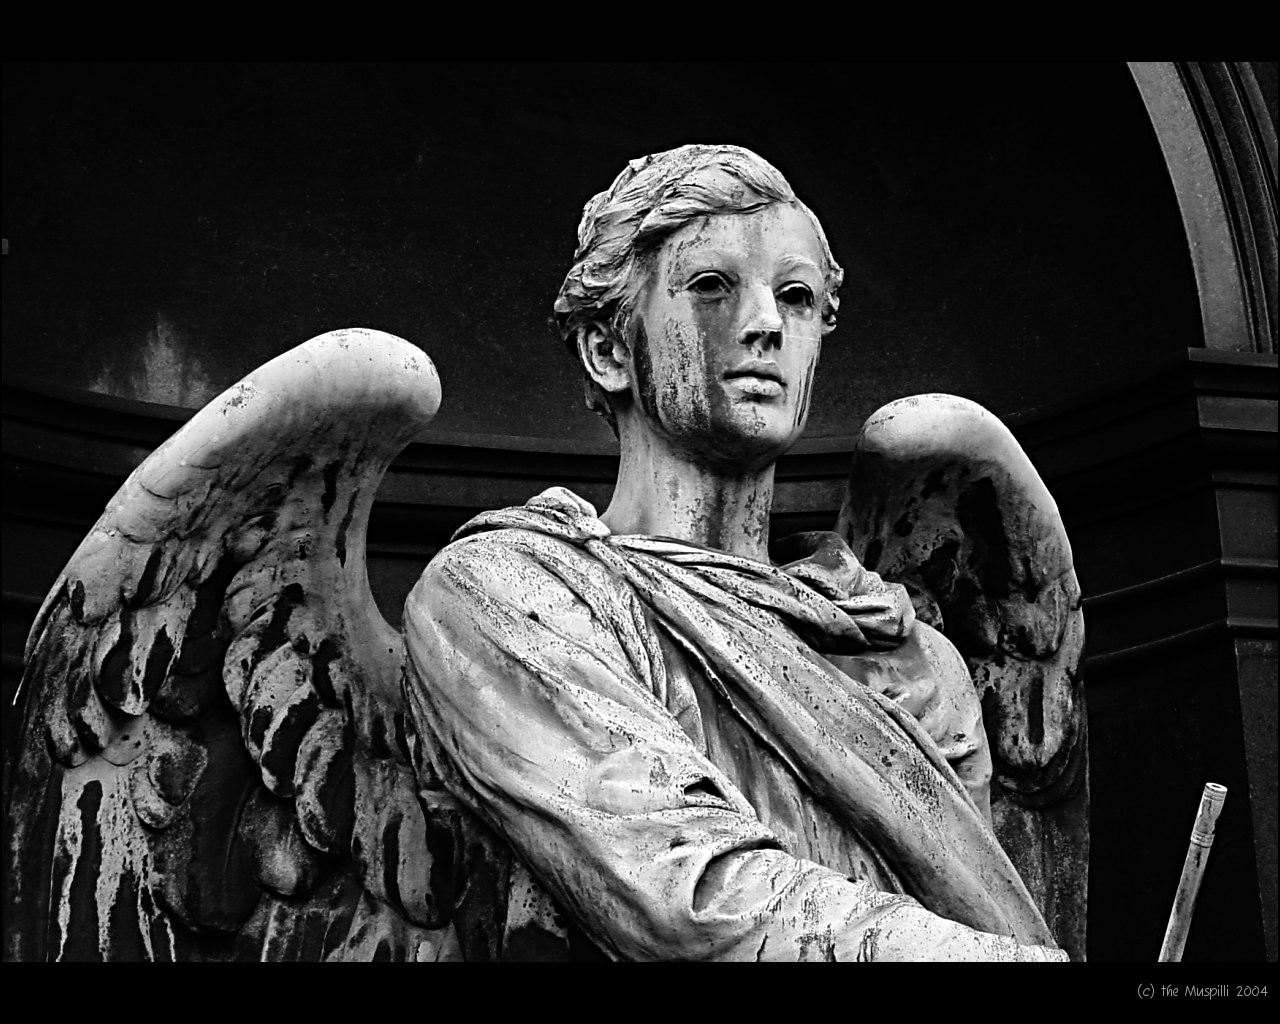 Man Made Angel Statue 1280x1024